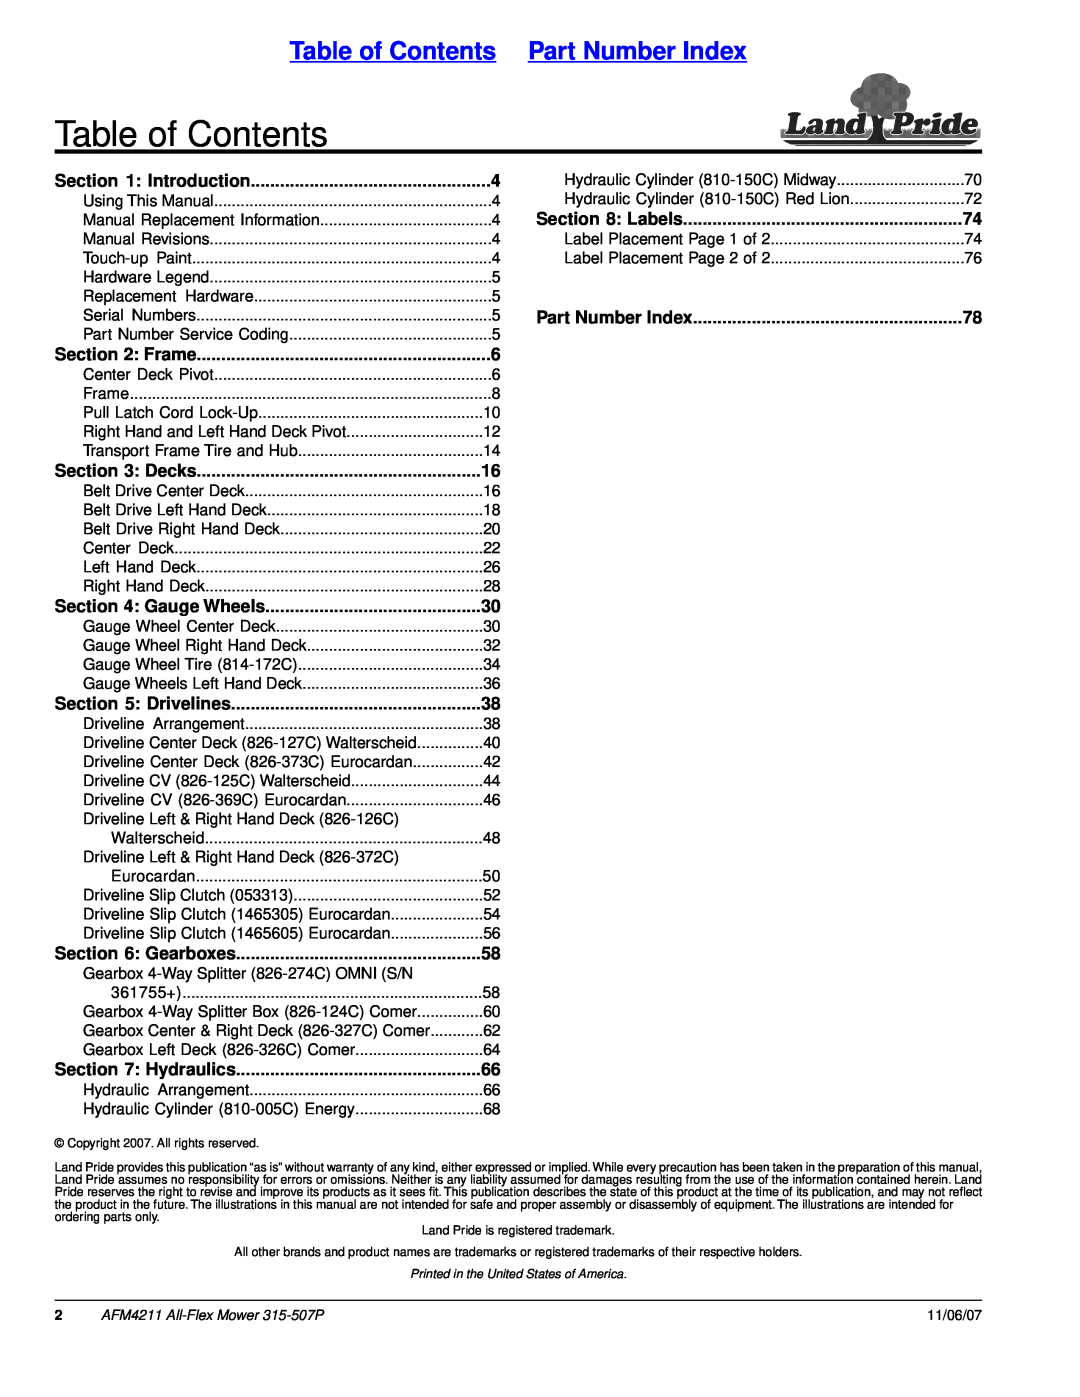 Land Pride 315-507P Table of Contents Part Number Index, Introduction, Frame, Decks, Gauge Wheels, Drivelines, Labels 